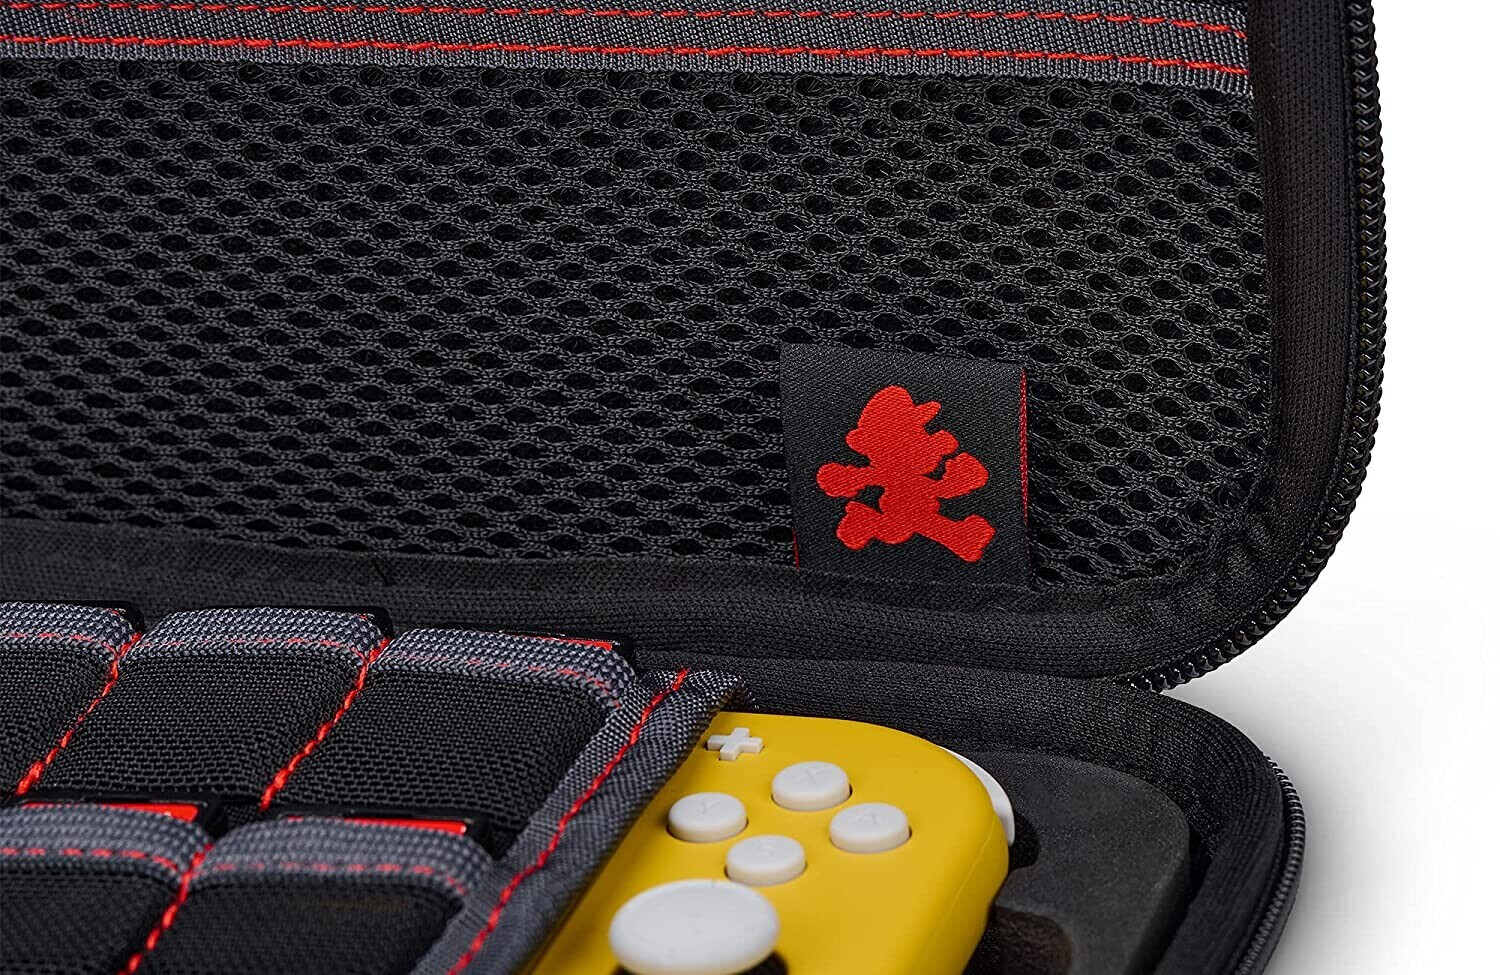 PowerA Nintendo Switch OLED Protective Case - Super Mario